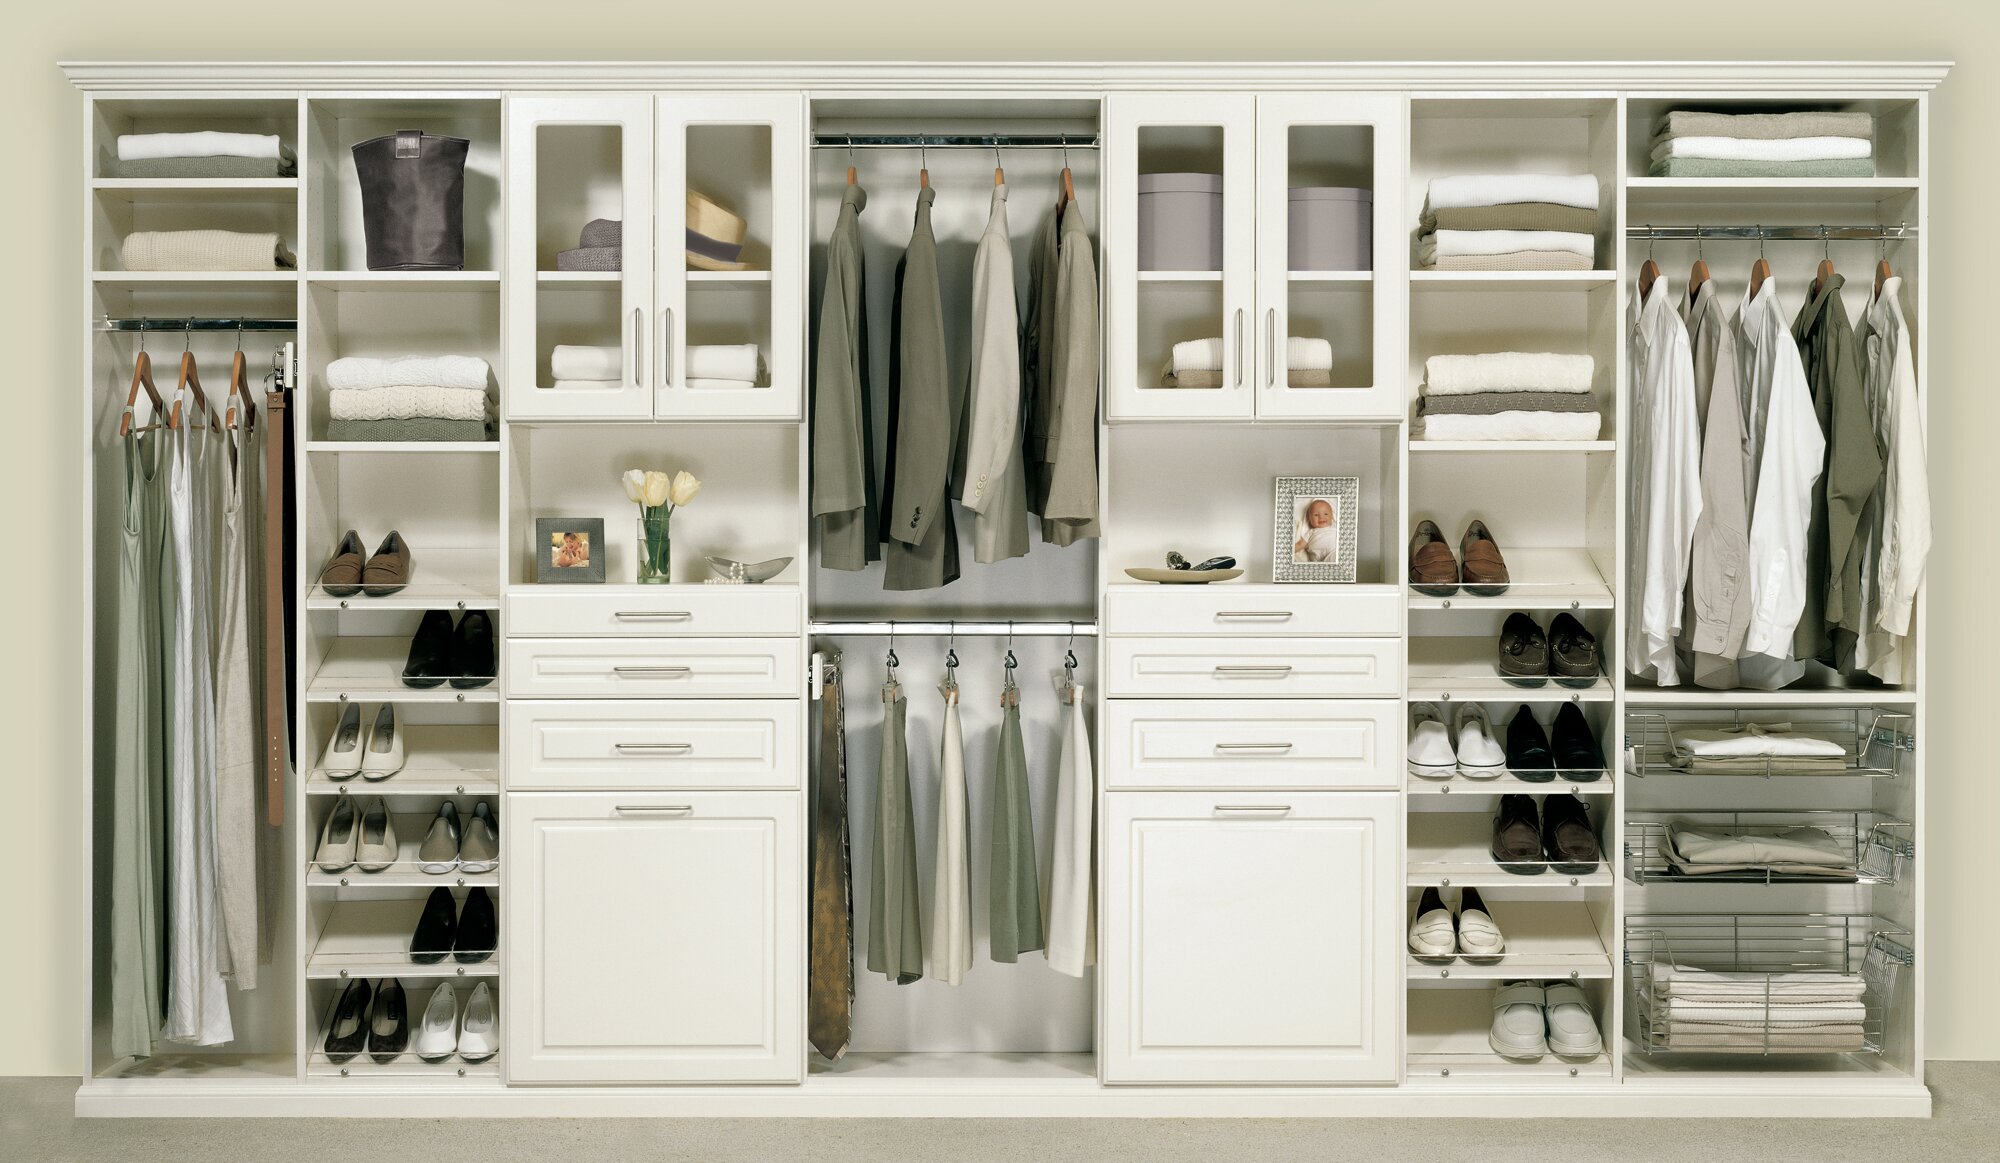 Inspiring Interior Storage Design Ideas with Diy Walk in Closet: Diy Walk In Closet | Prefab Closet Kits | Diy Walkin Closet